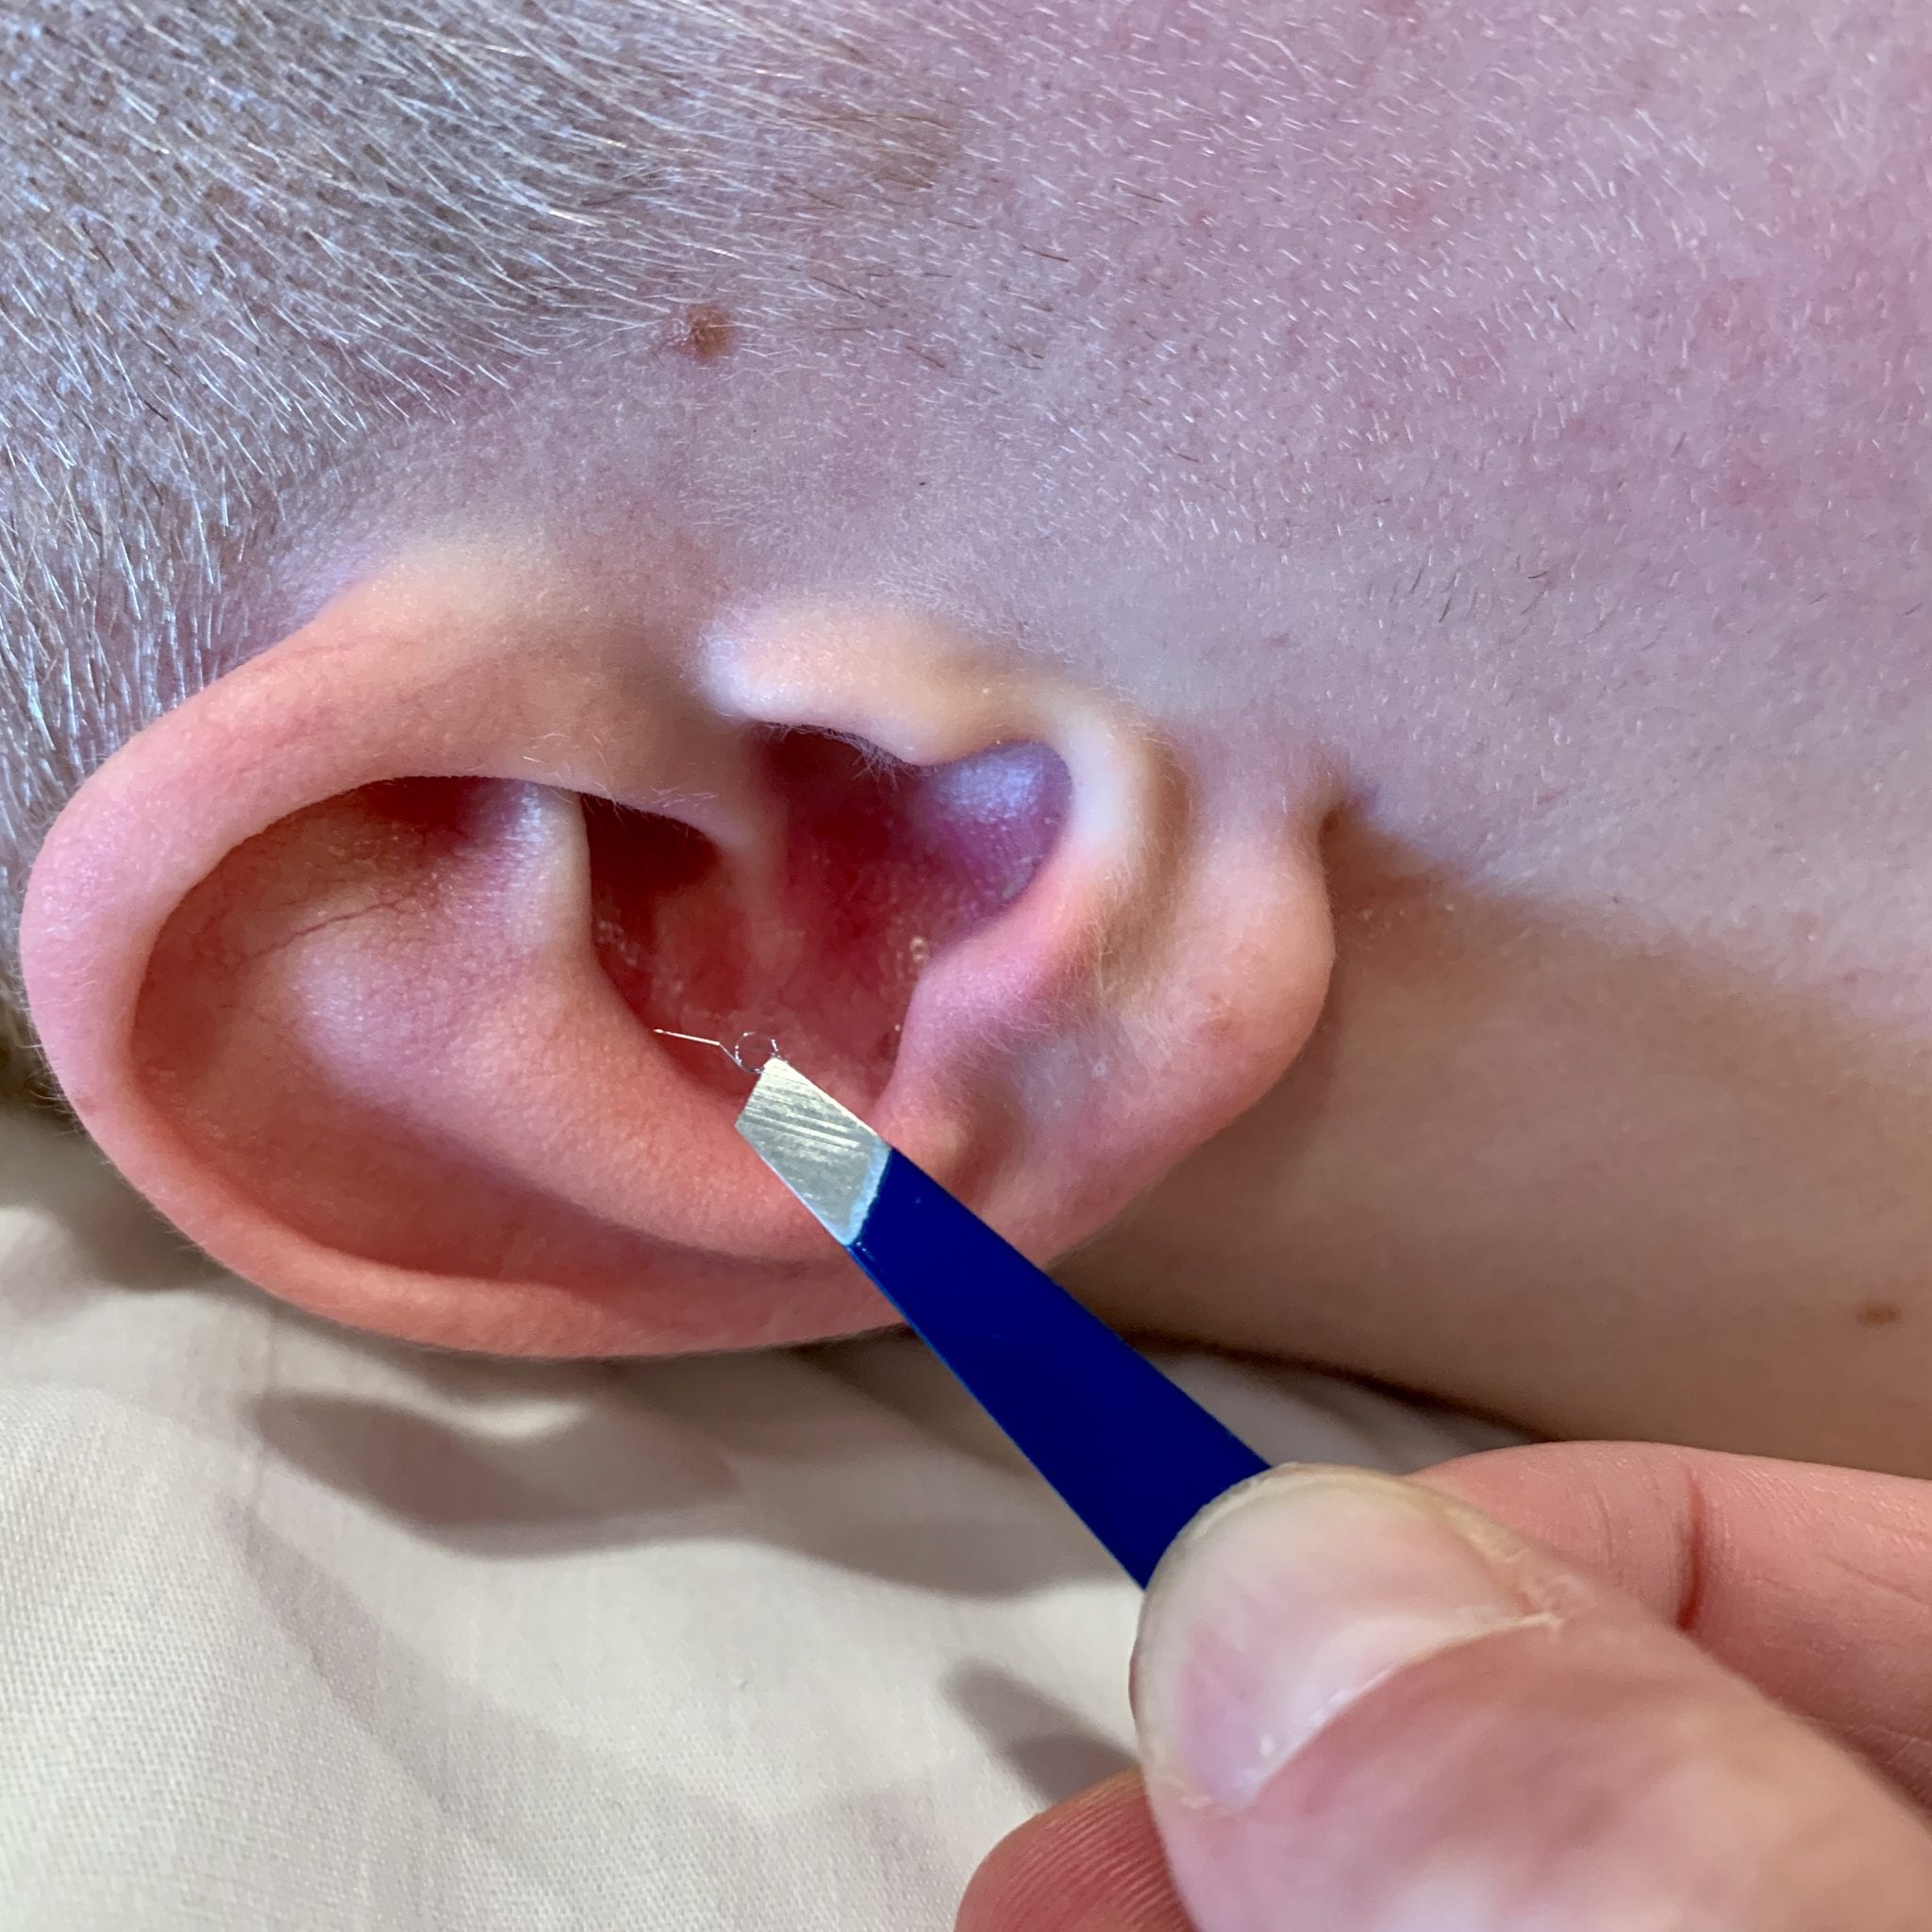 Spinex Needle near ear